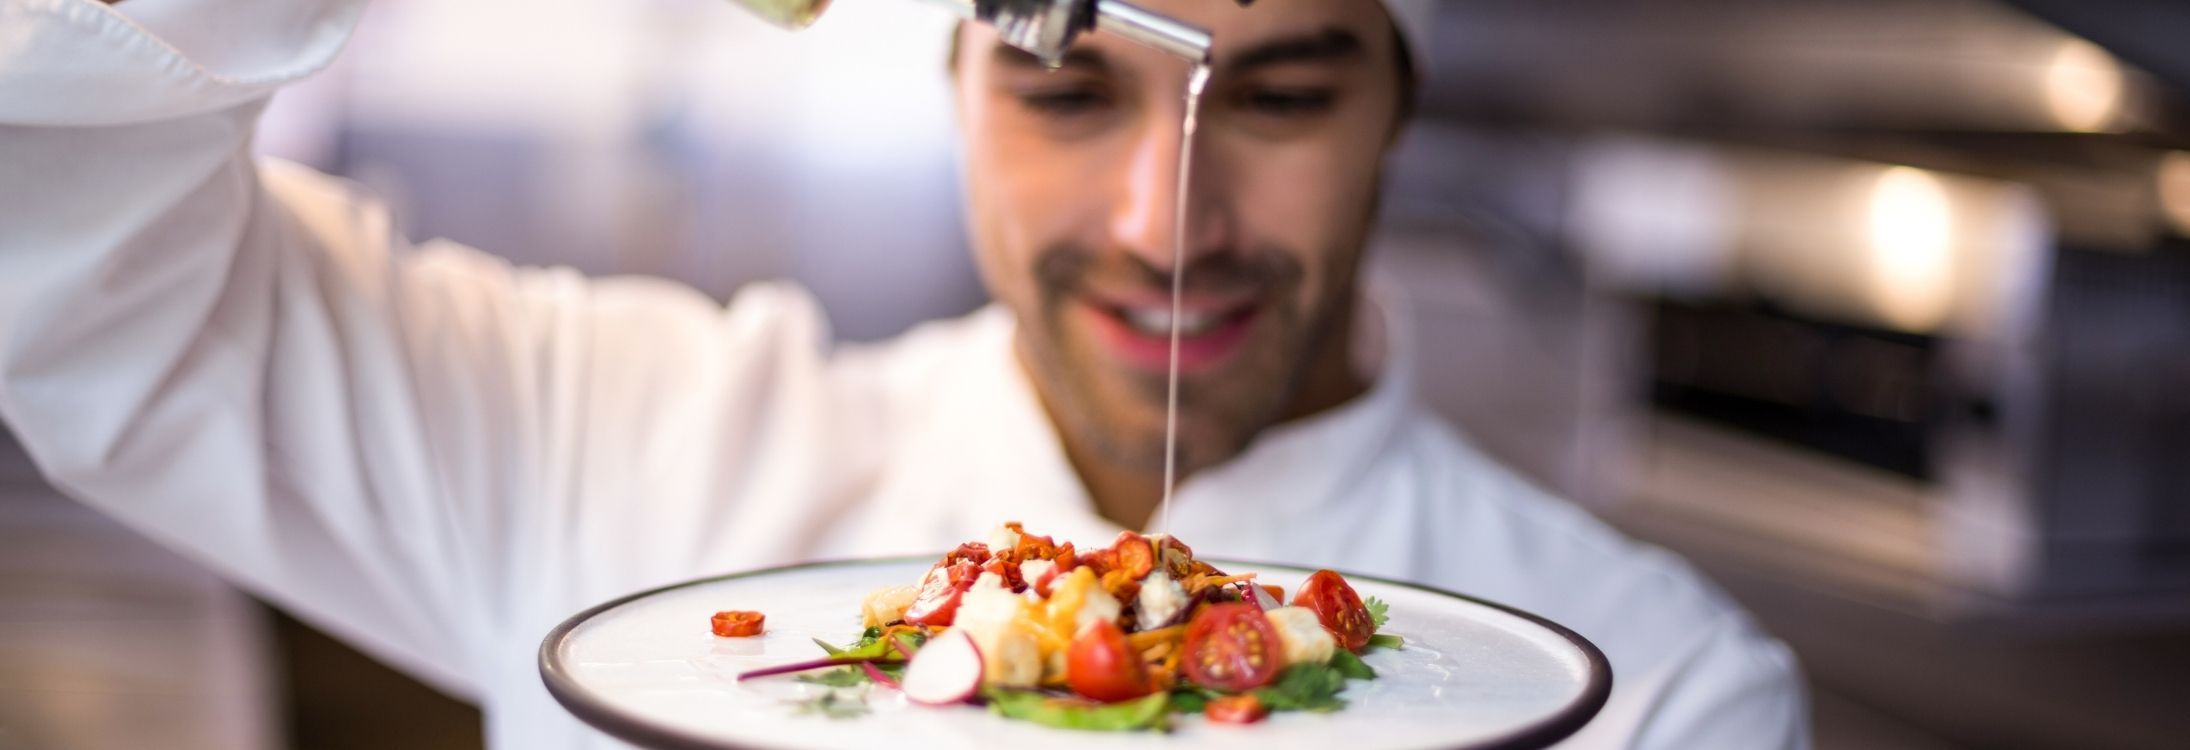 Michelin star restaurants in Dubai by Indian chefs